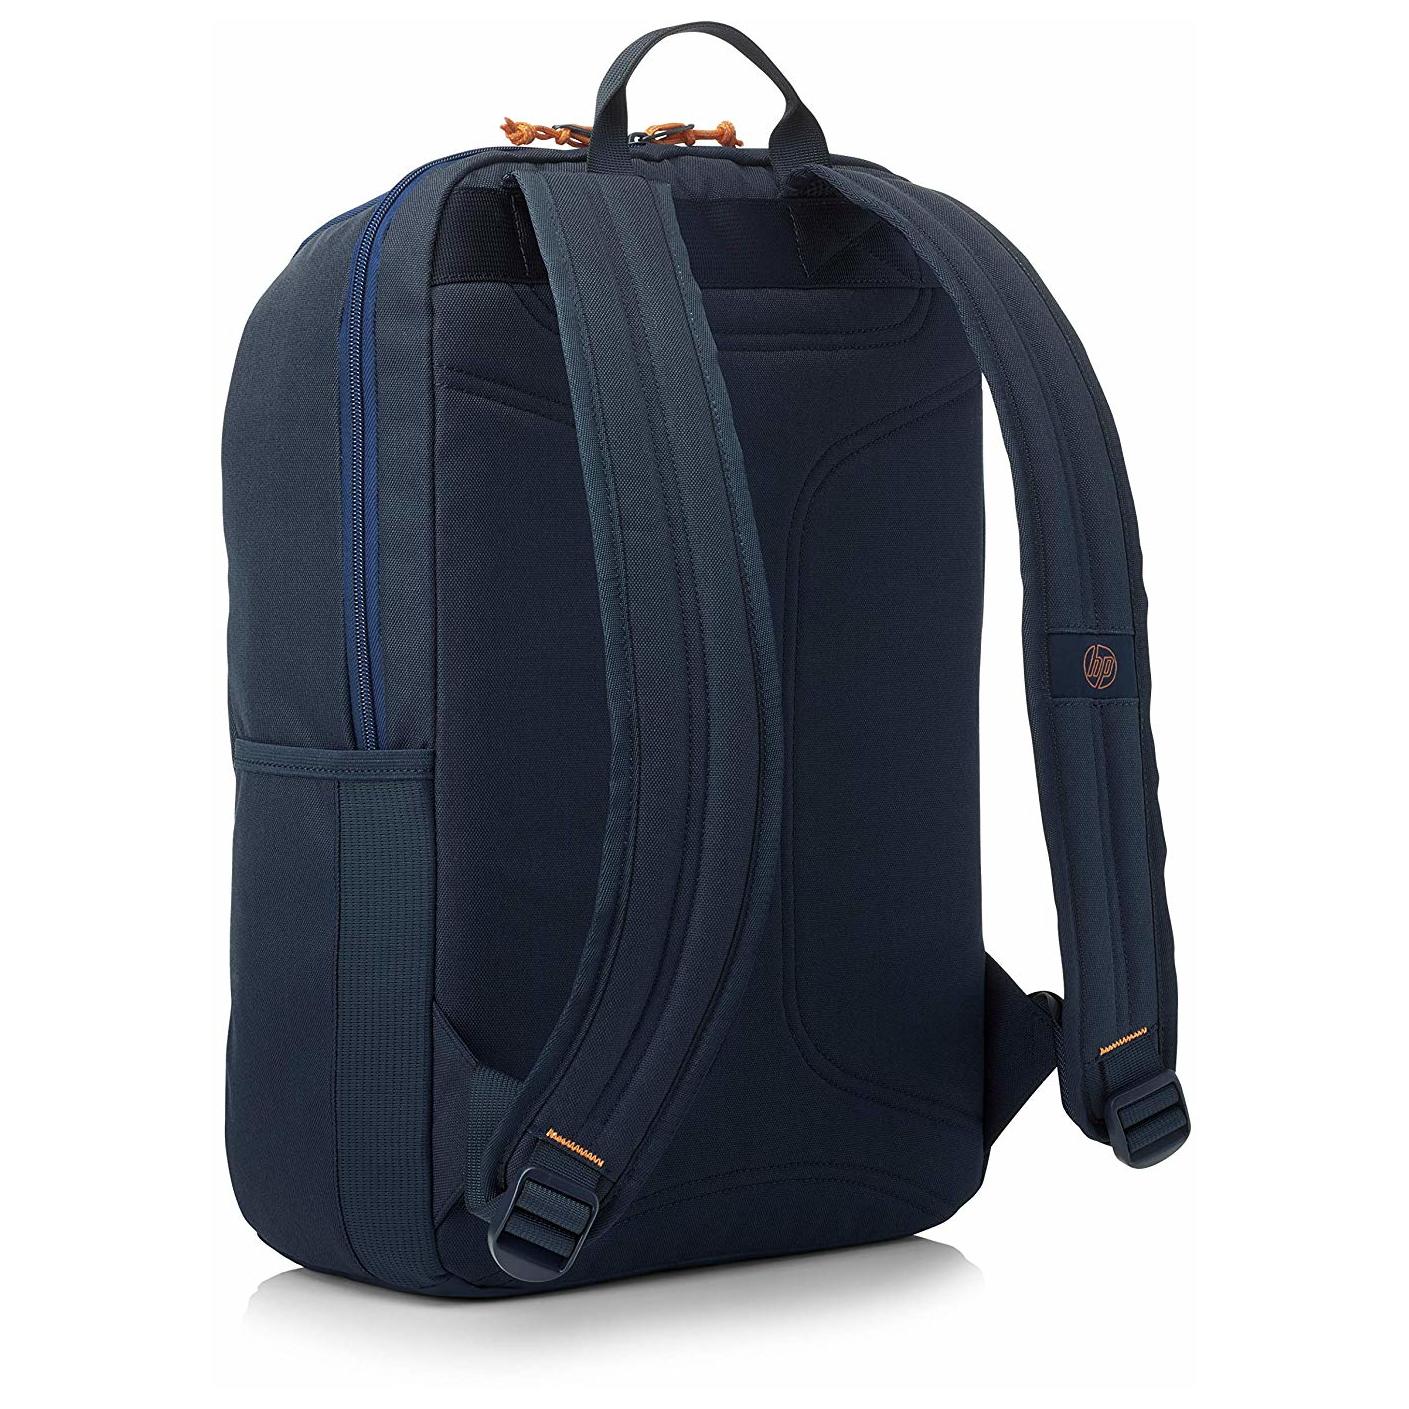 Mochila Portatil HP Computer Backpack 15.6 Blue - 5EE92AA